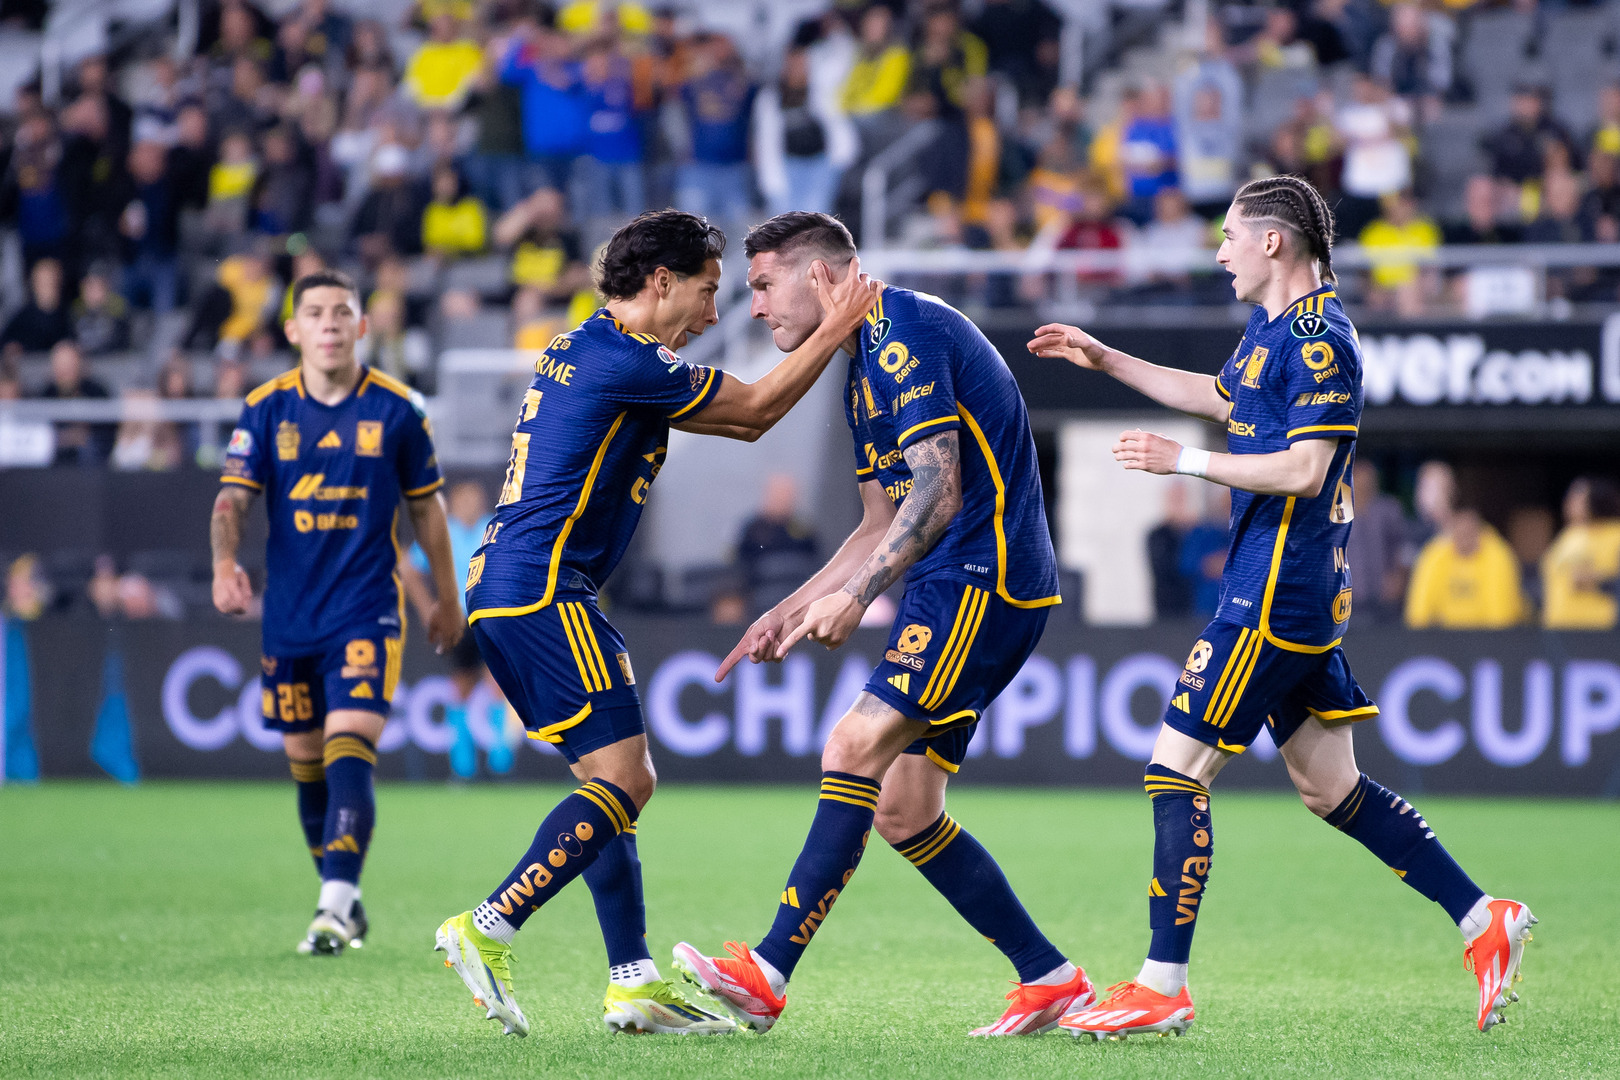 TigresColumbus a definir al ganador de la serie de cuartos de final